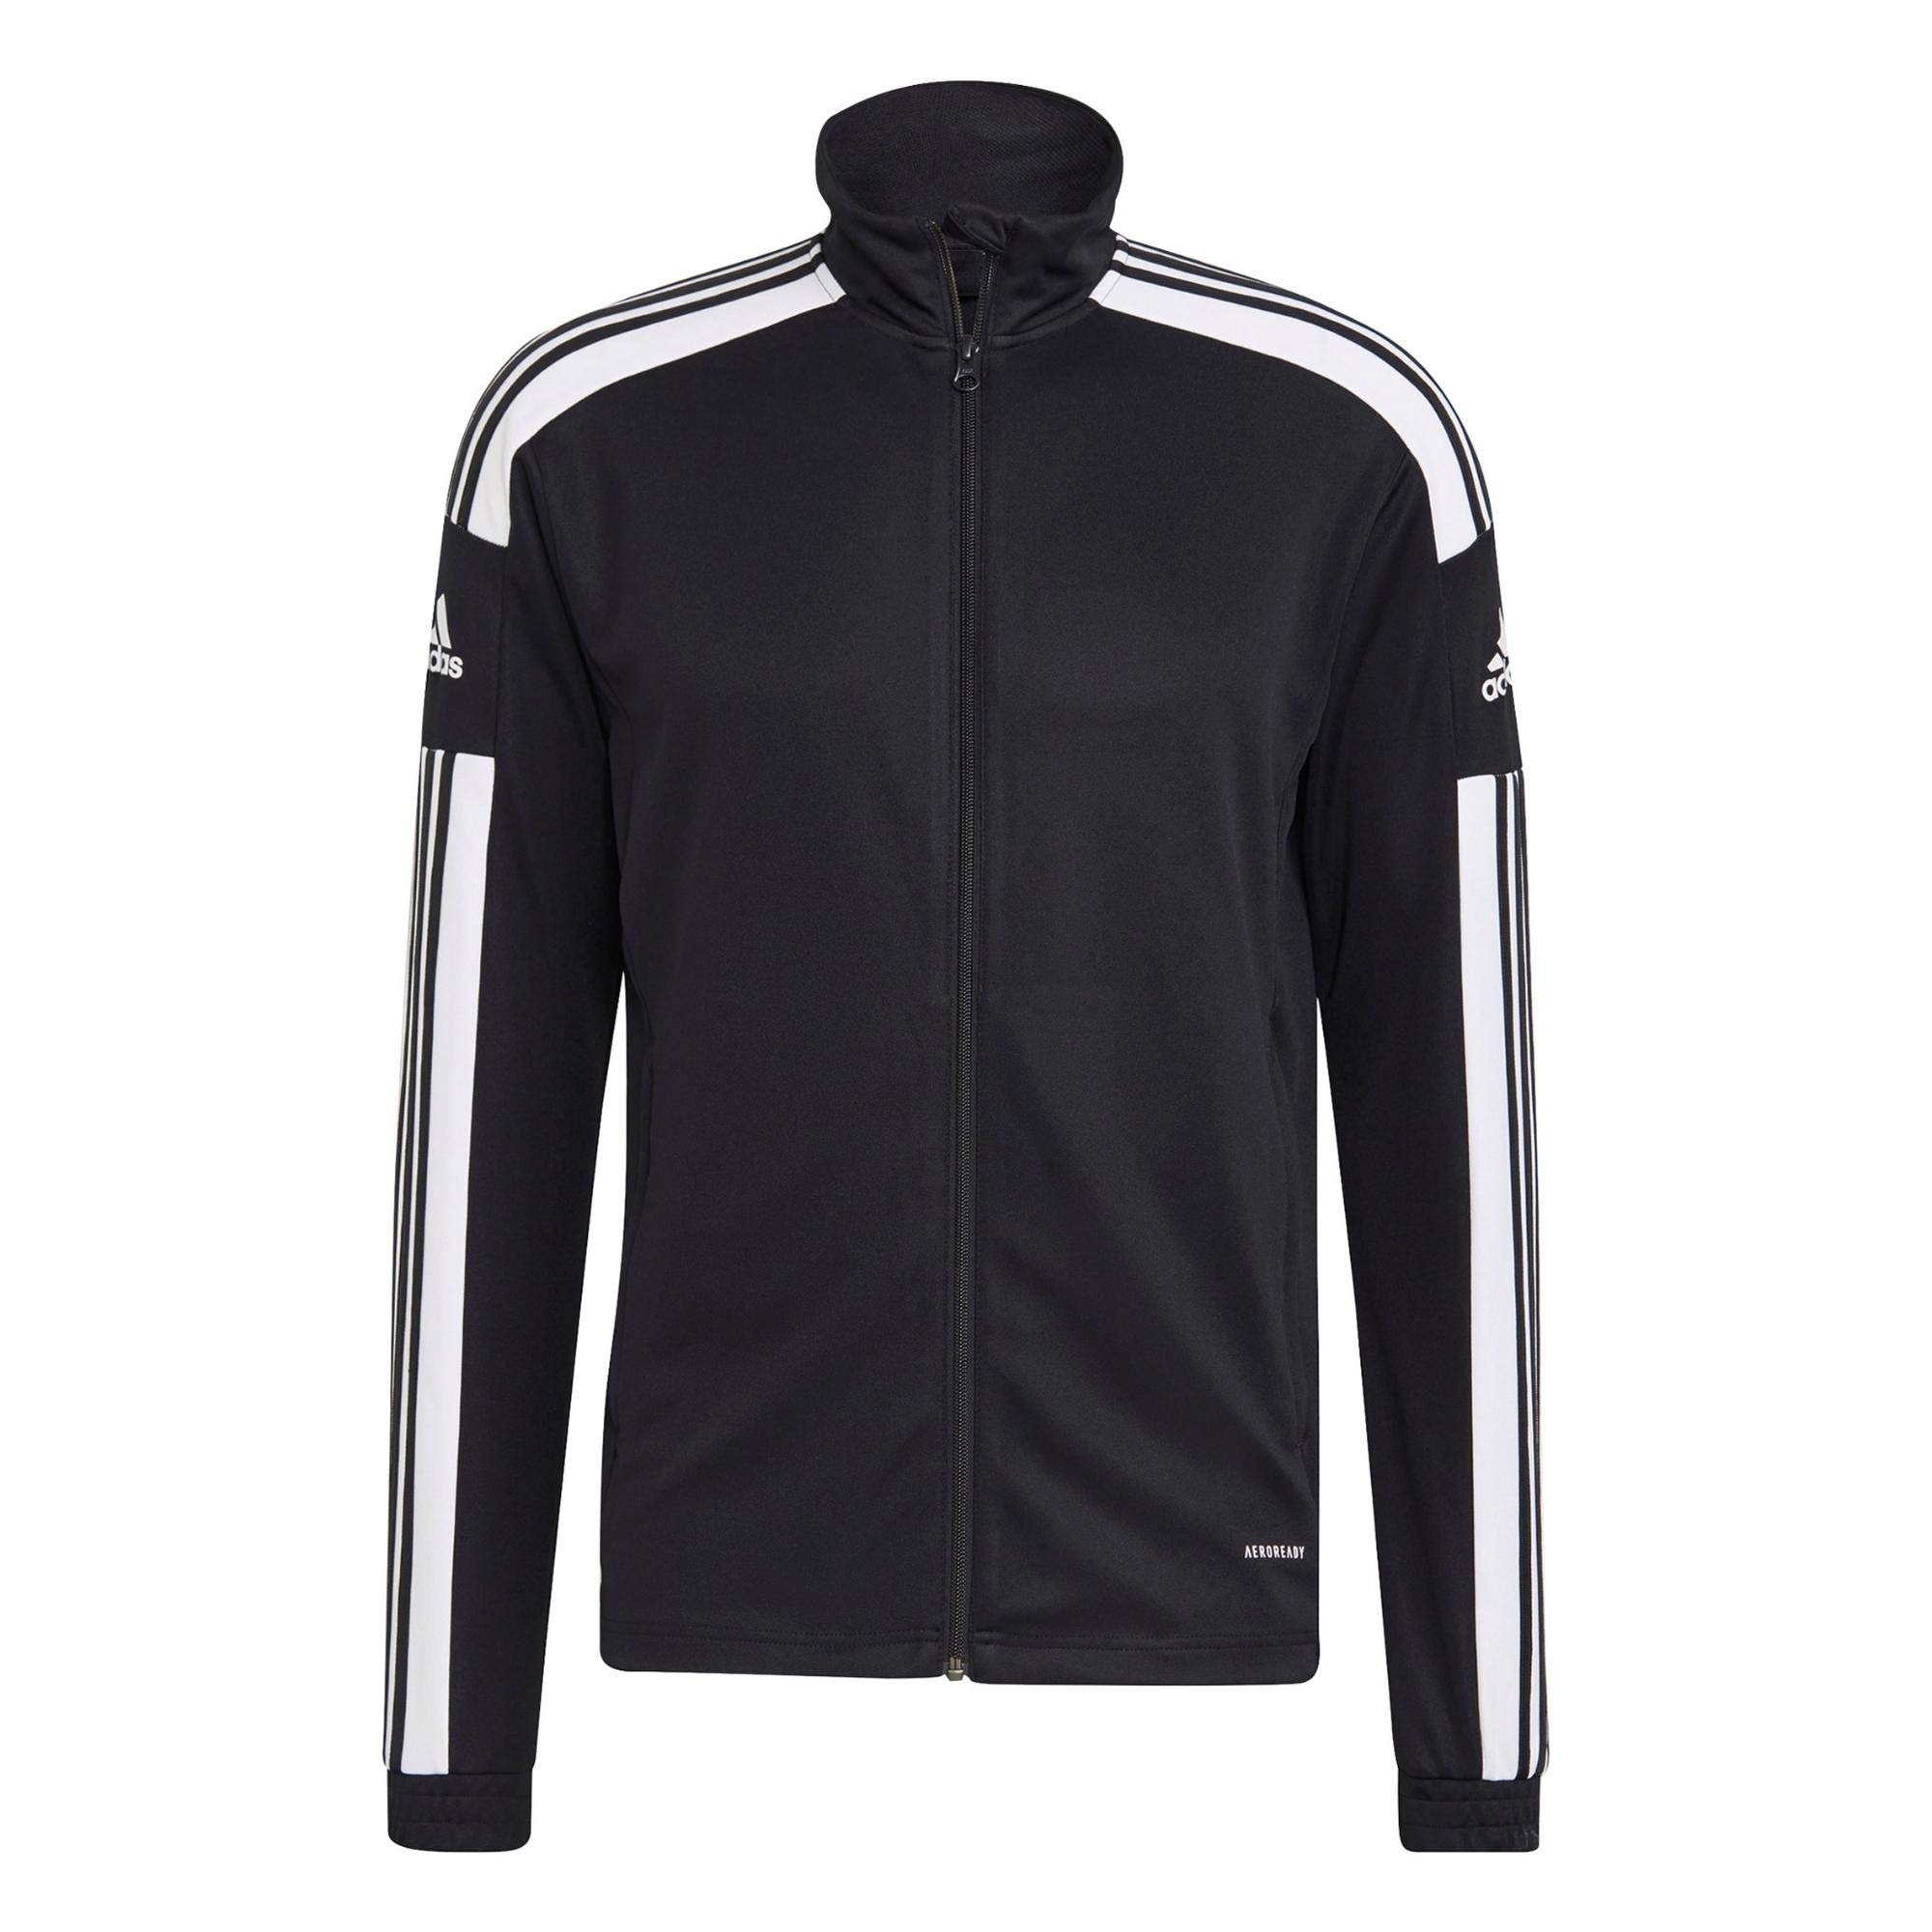 adidas Herren Sq21 Tr Jkt Jacket, black/white, L EU